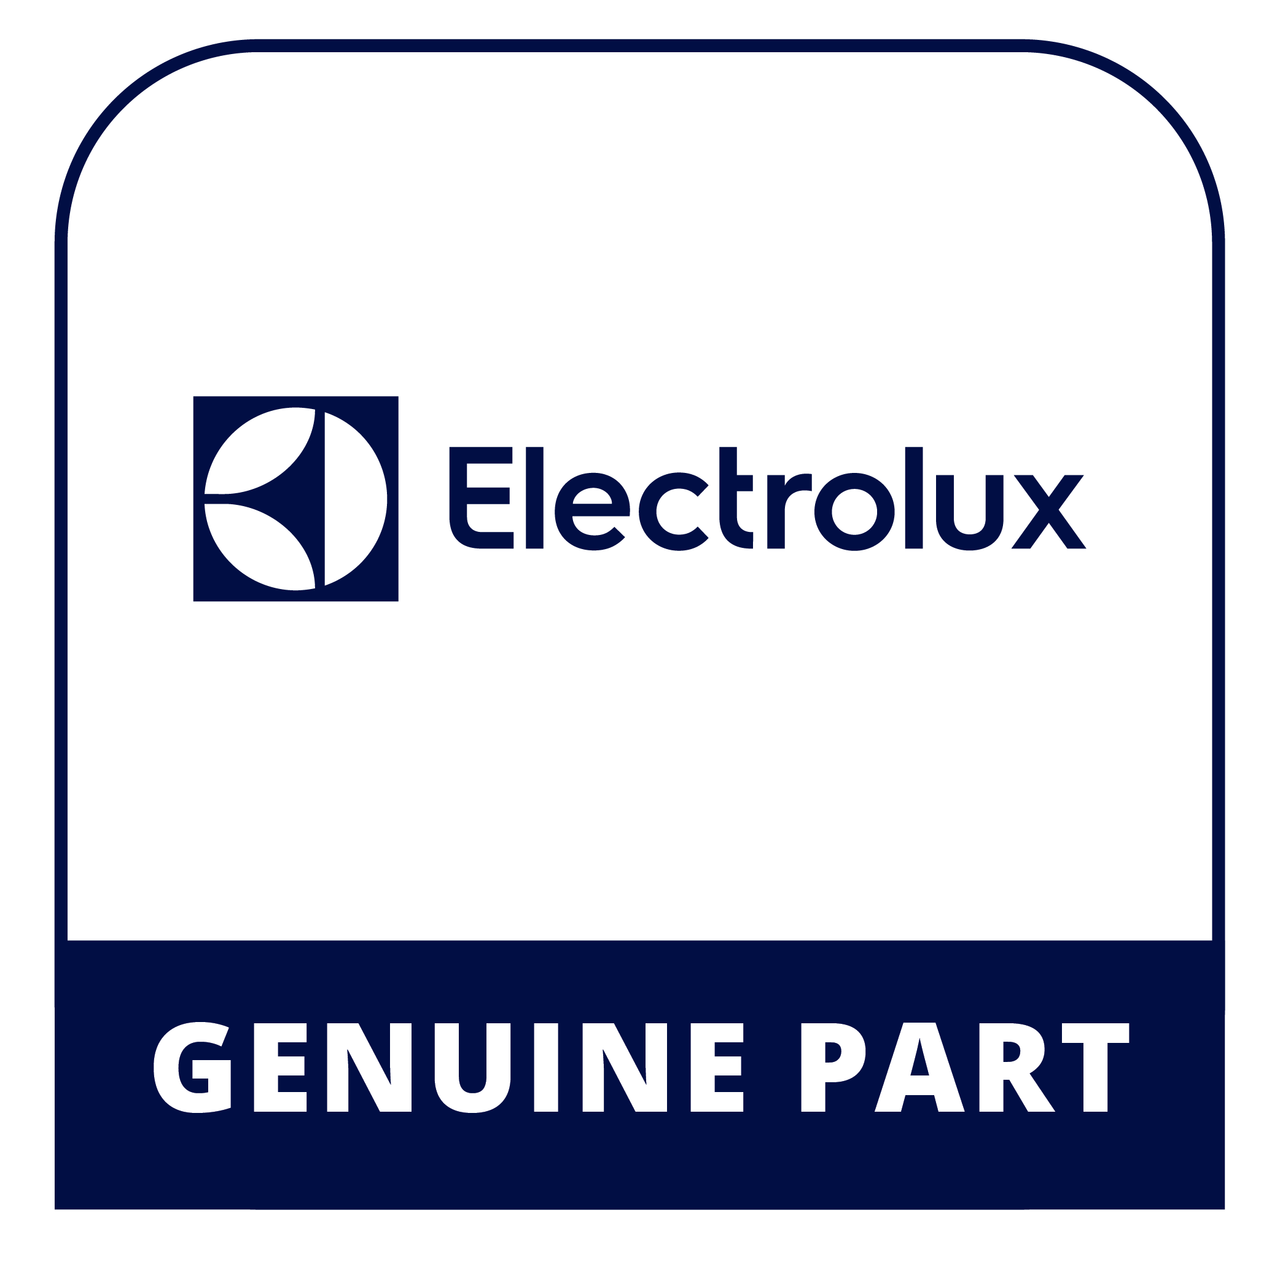 Frigidaire - Electrolux 5303918702 Control Box Kit - Genuine Electrolux Part